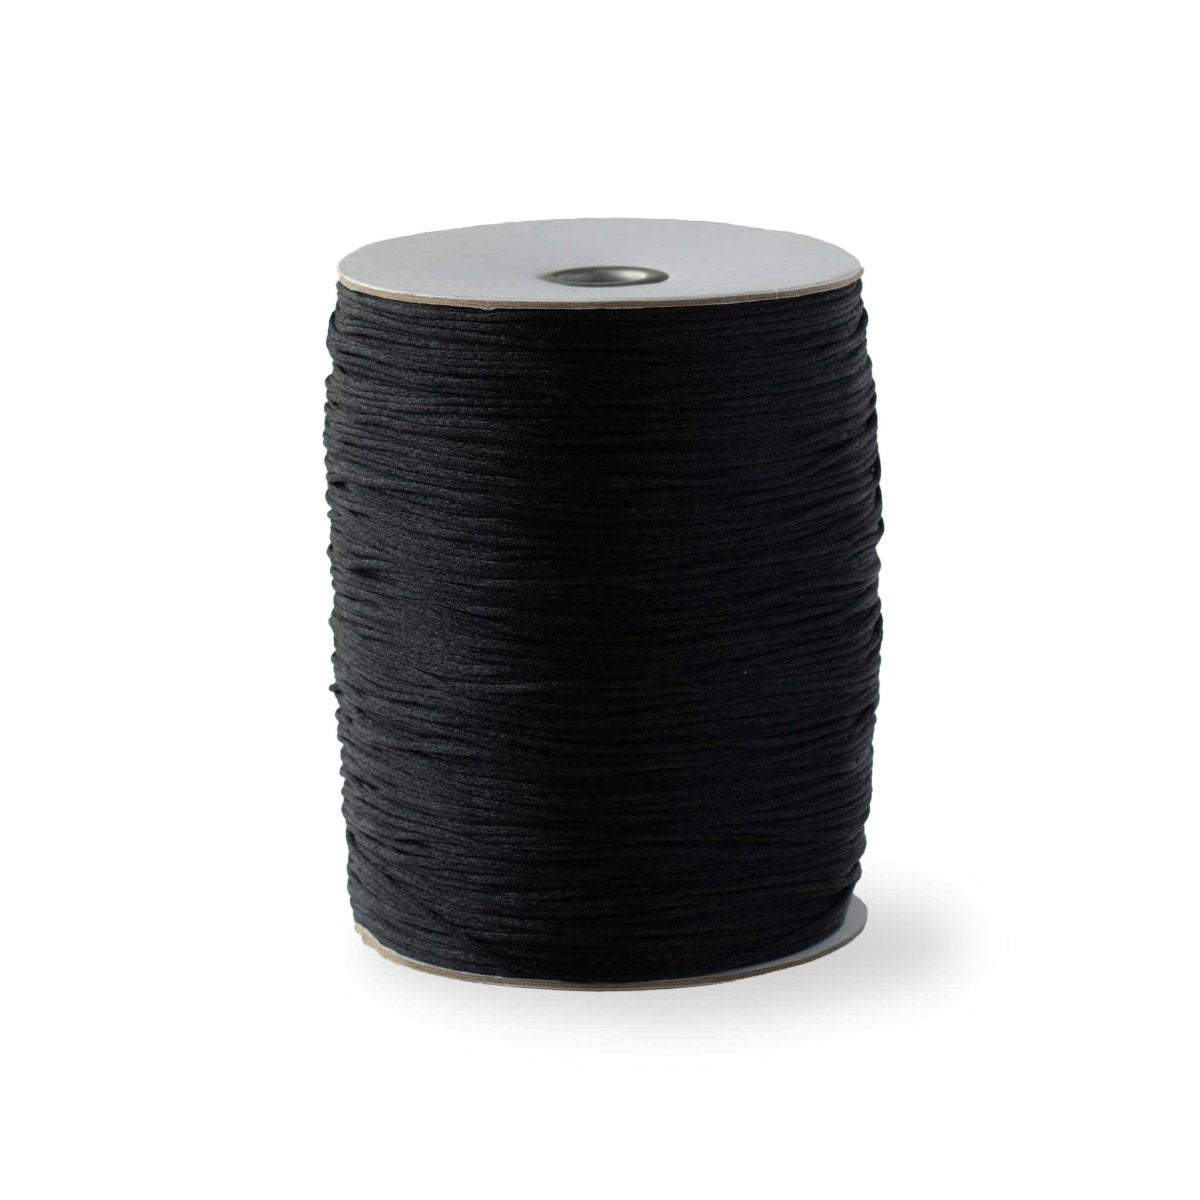 Cording Nylon Cord 1.5mm - Spools Black from Cara & Co Craft Supply